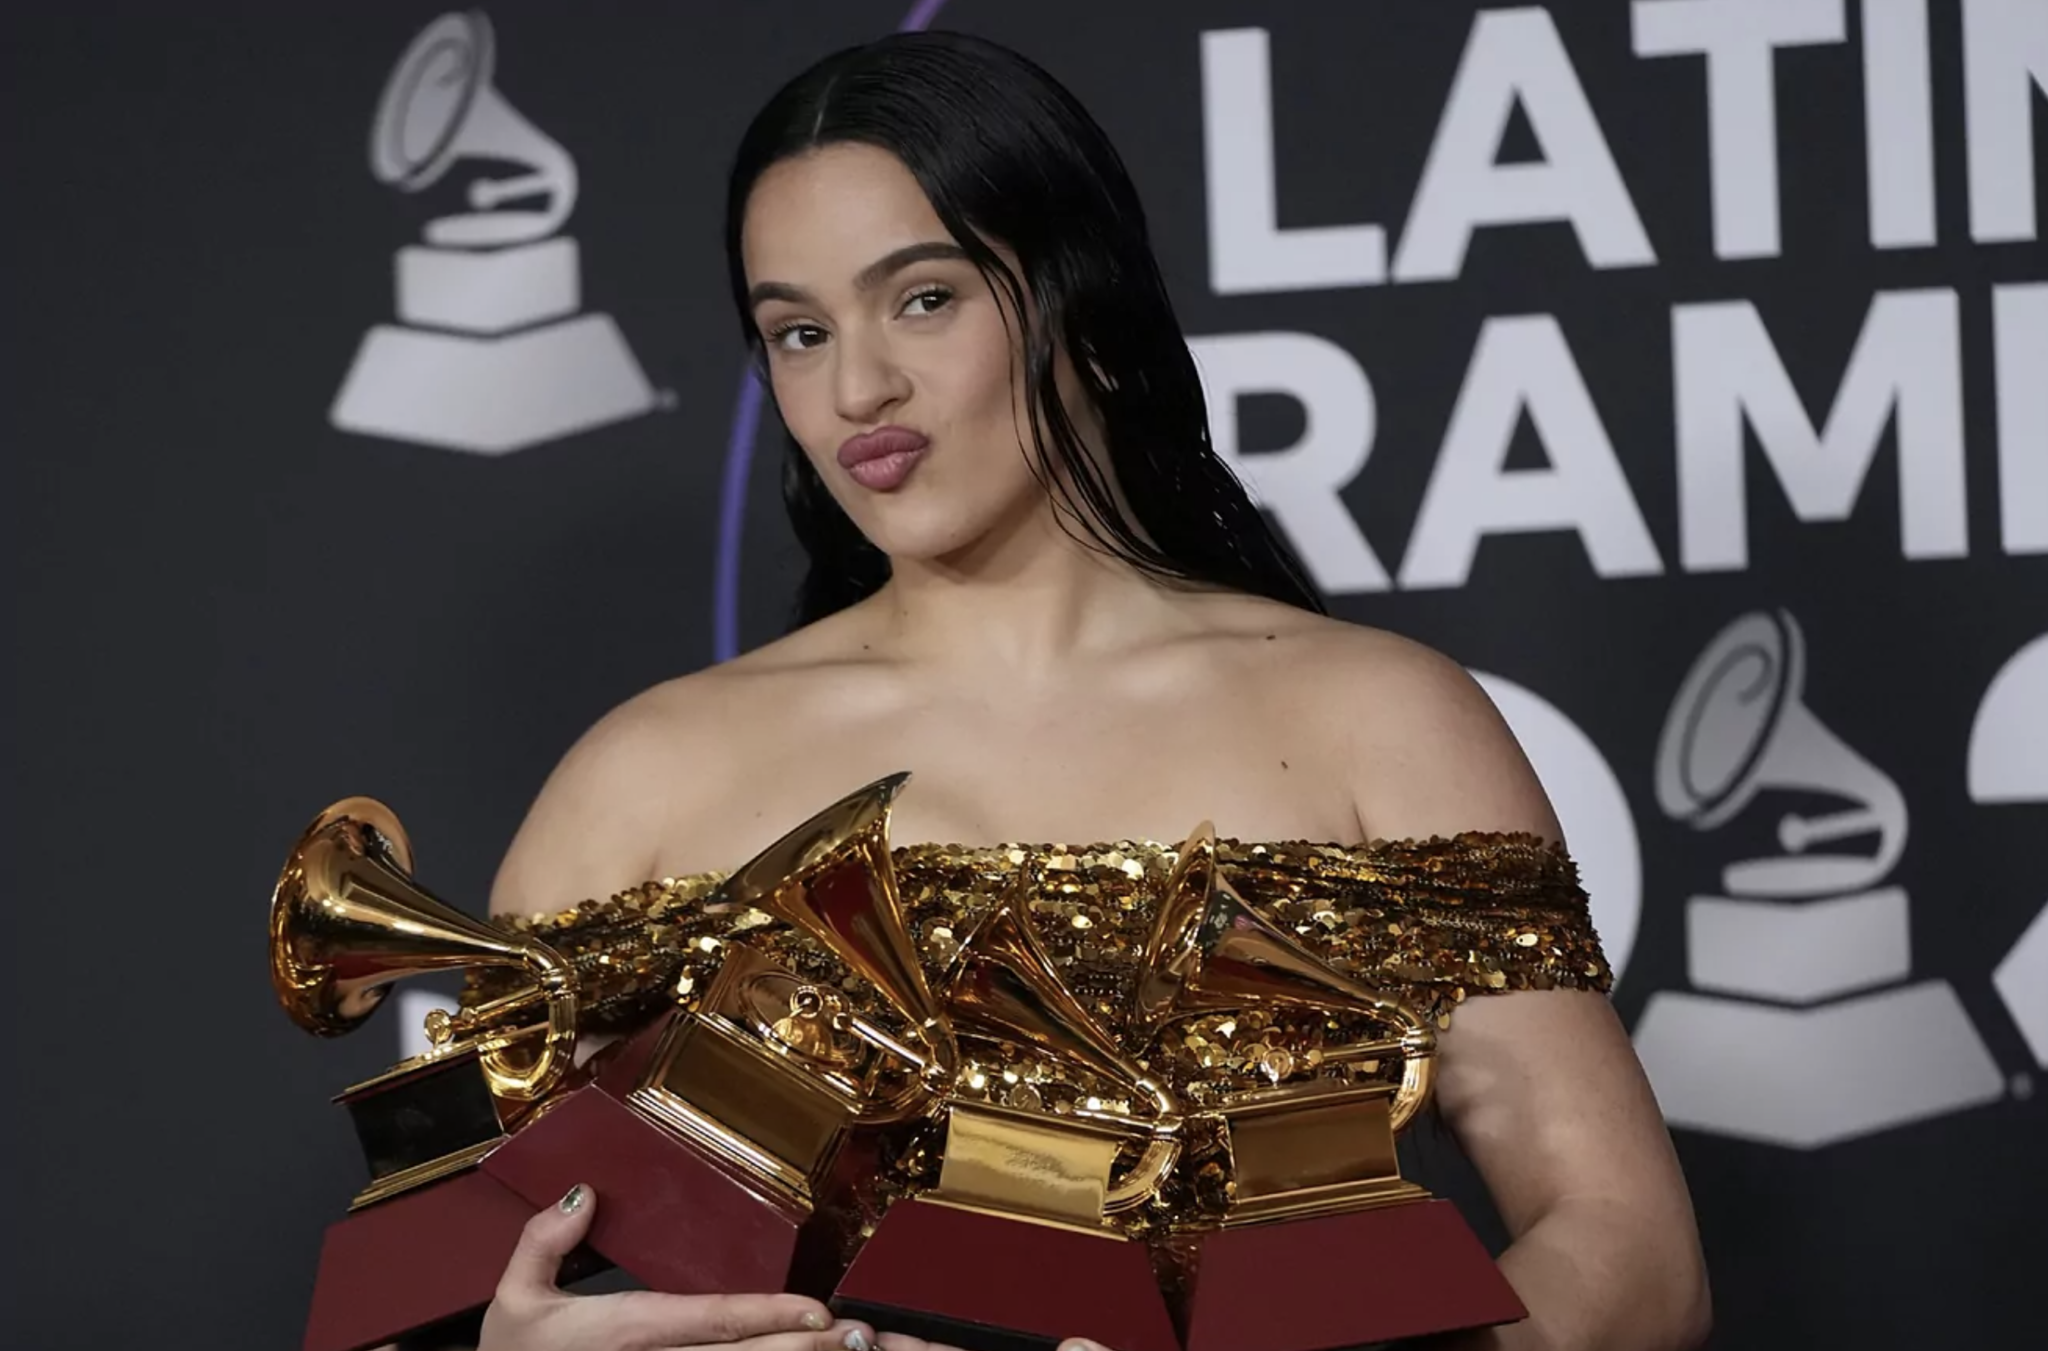 Latin Grammy Awards: How much money do the award winners get?